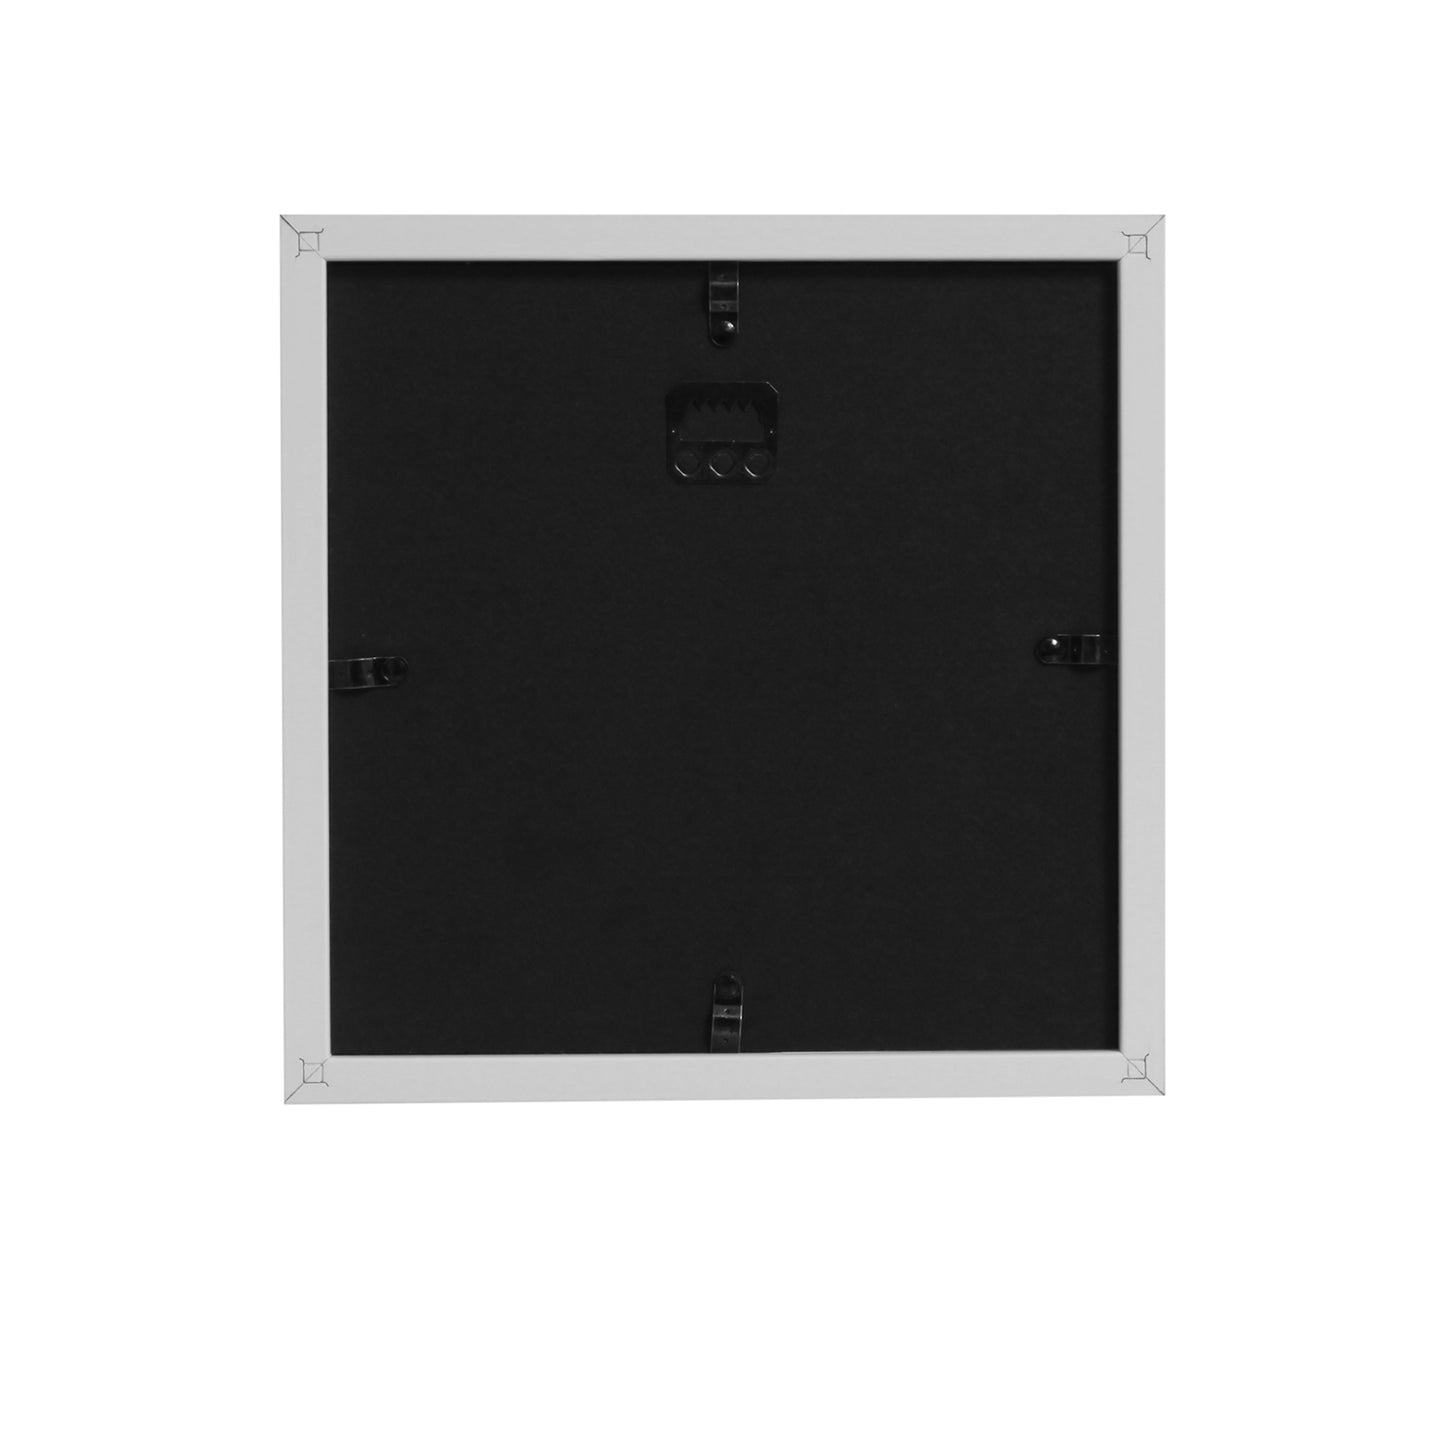 8" x 8” White MDF Wood Shadow Box Frame